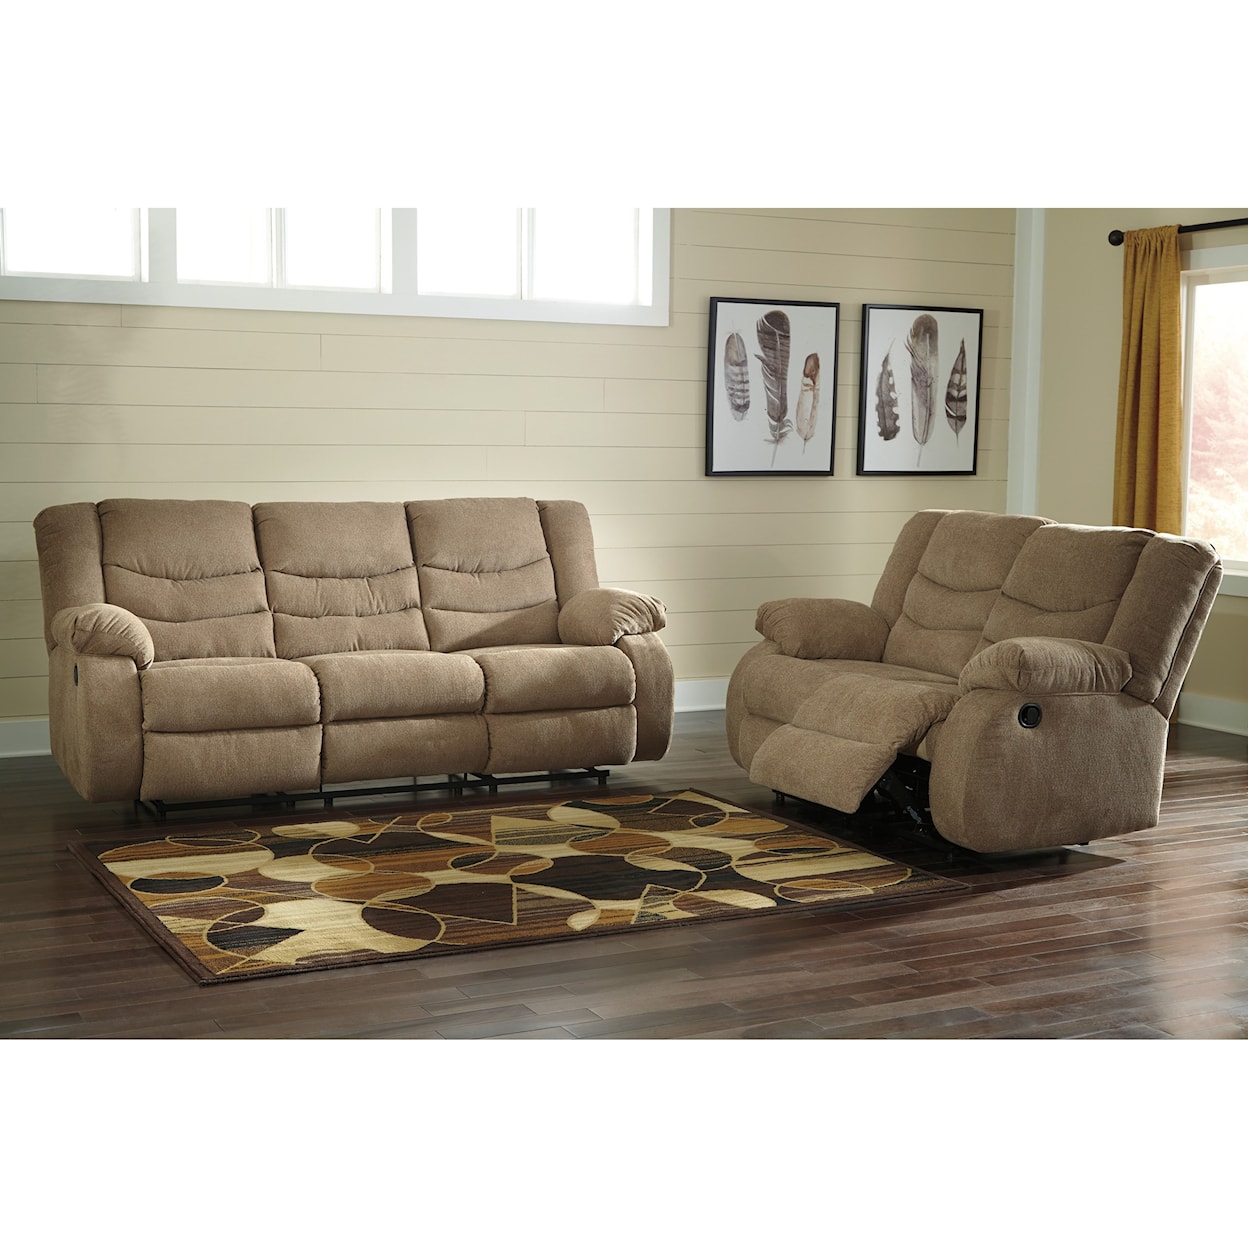 Ashley Furniture Signature Design Tulen Reclining Living Room Group